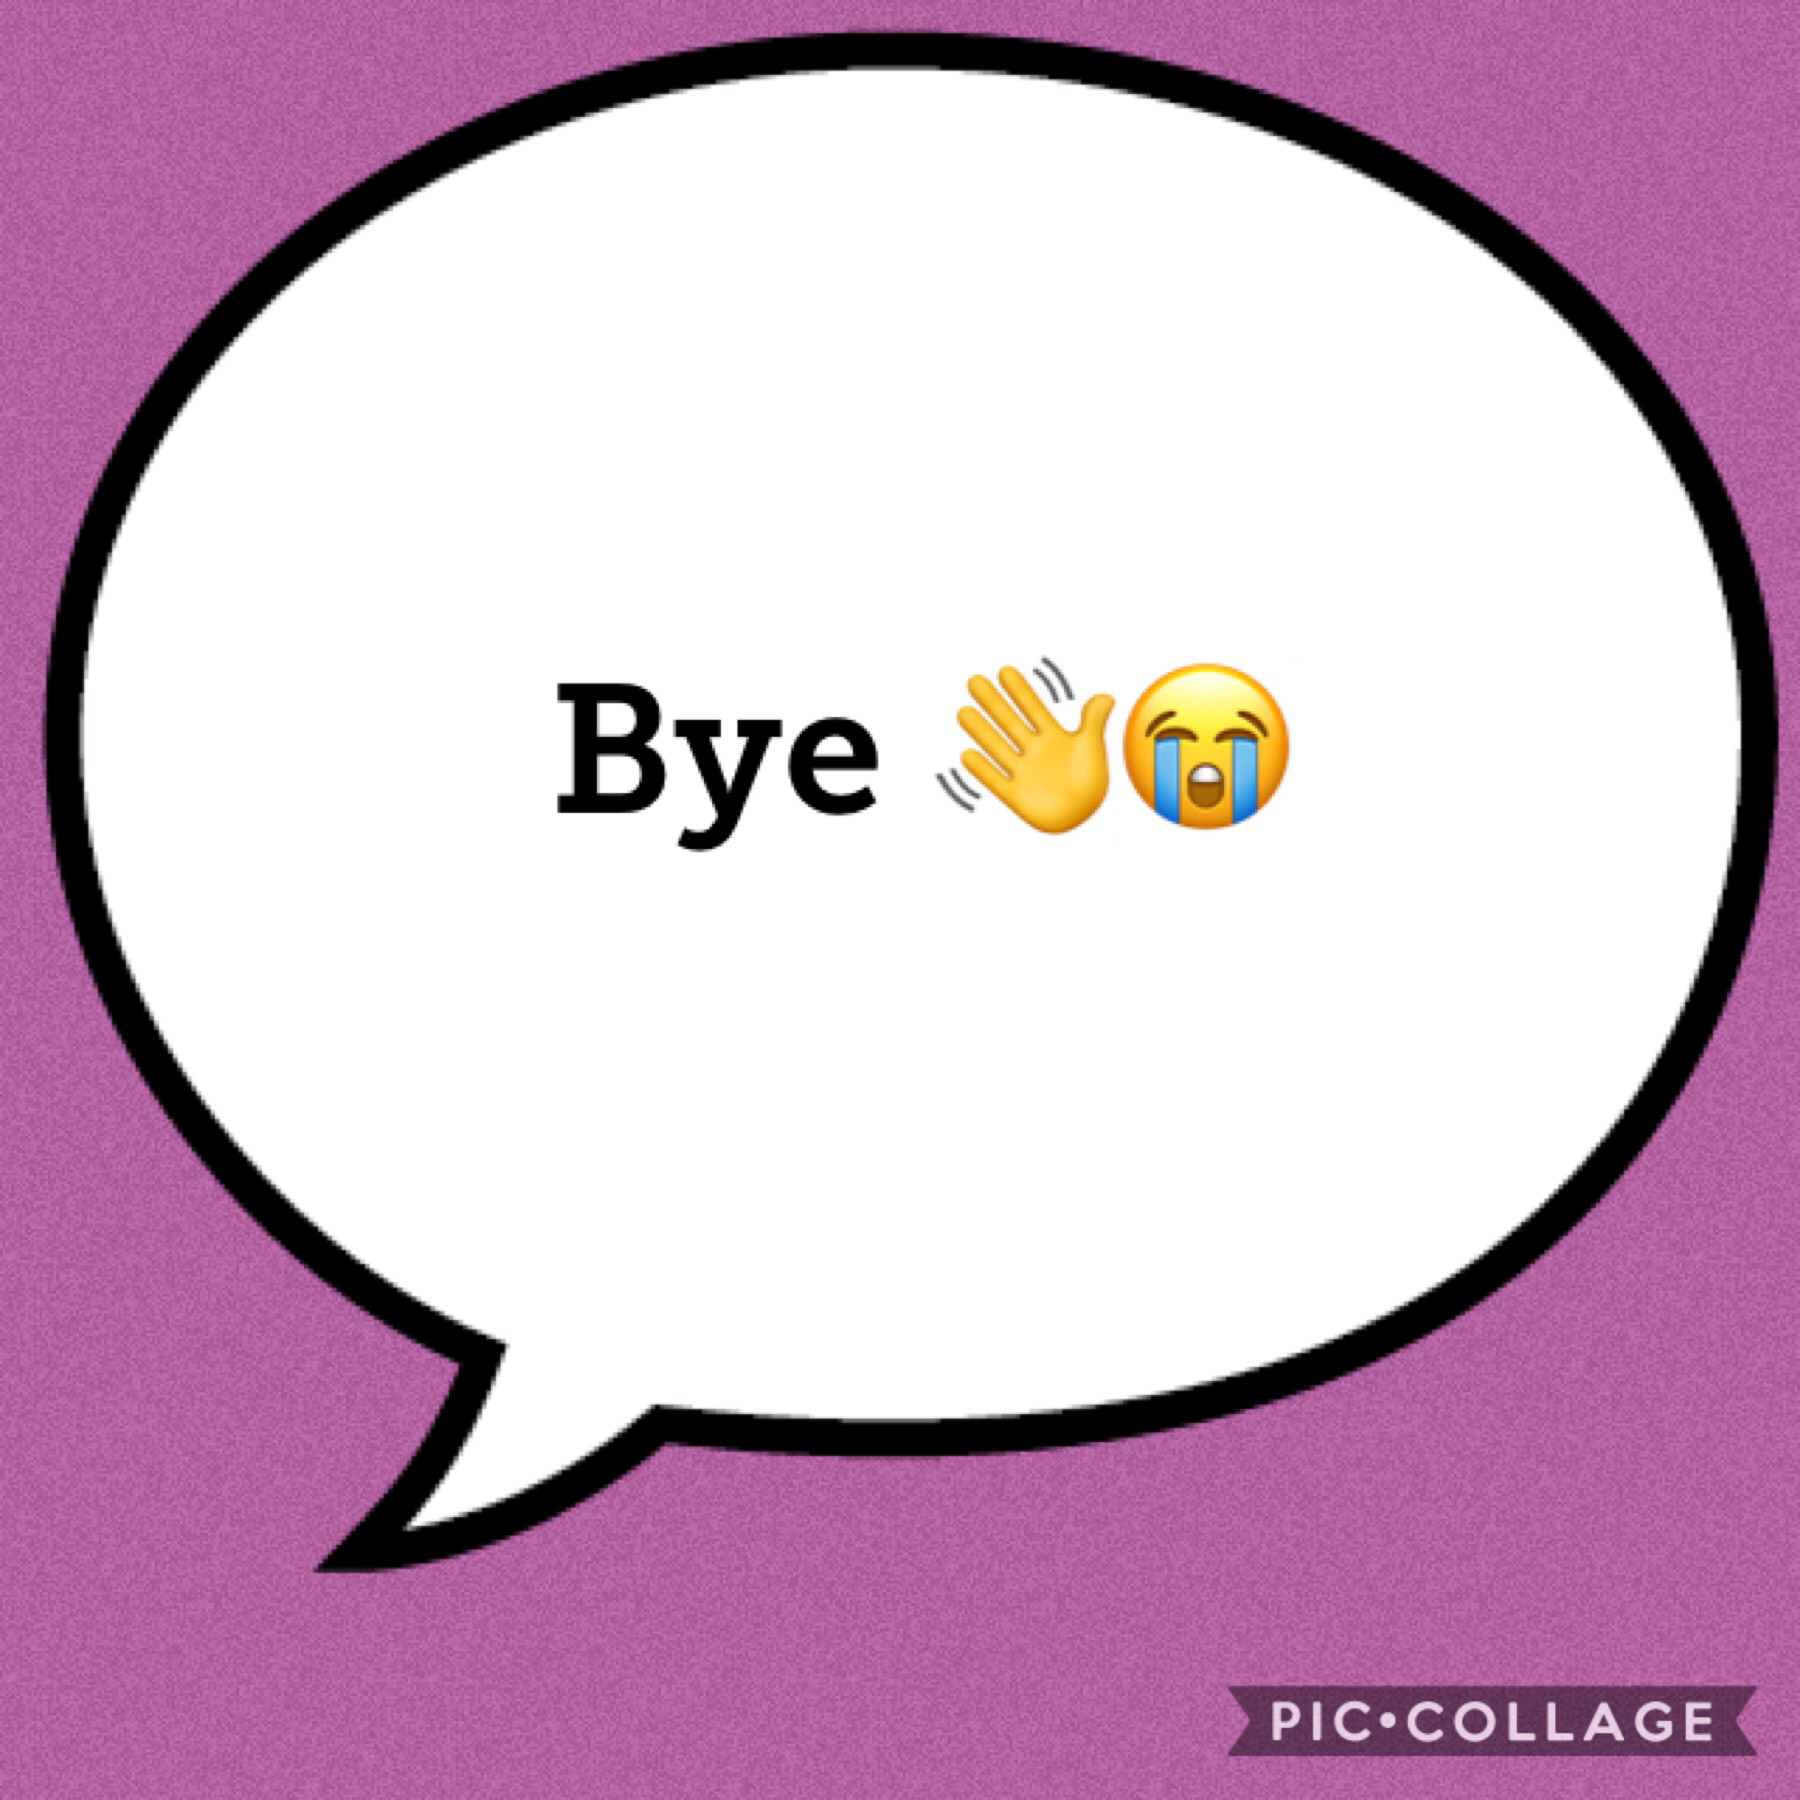 Bye 